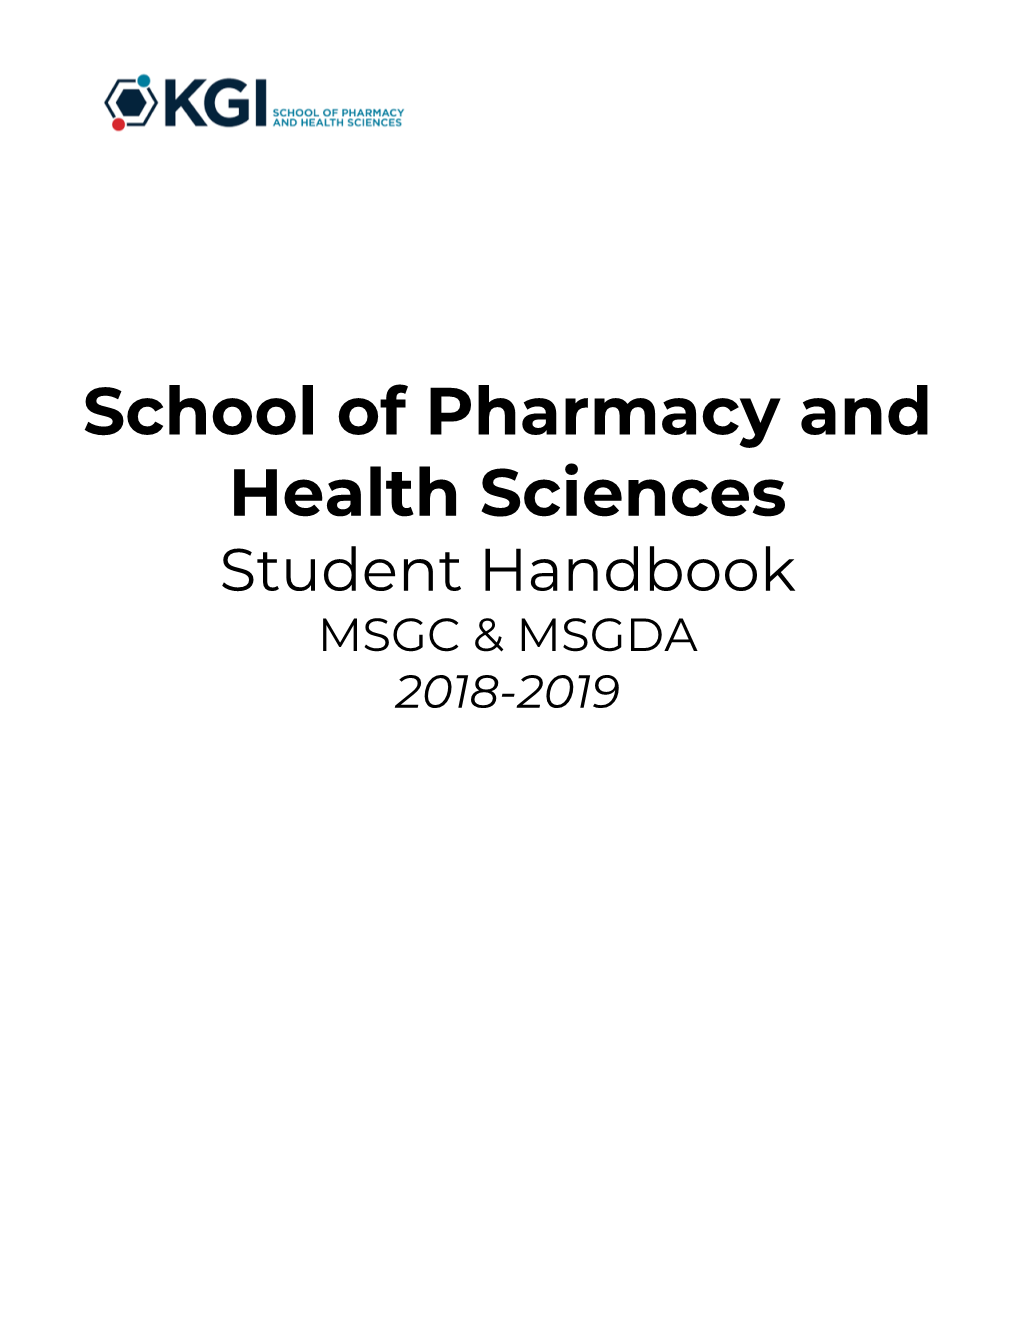 School of Pharmacy and Health Sciences Student Handbook MSGC & MSGDA 2018-2019